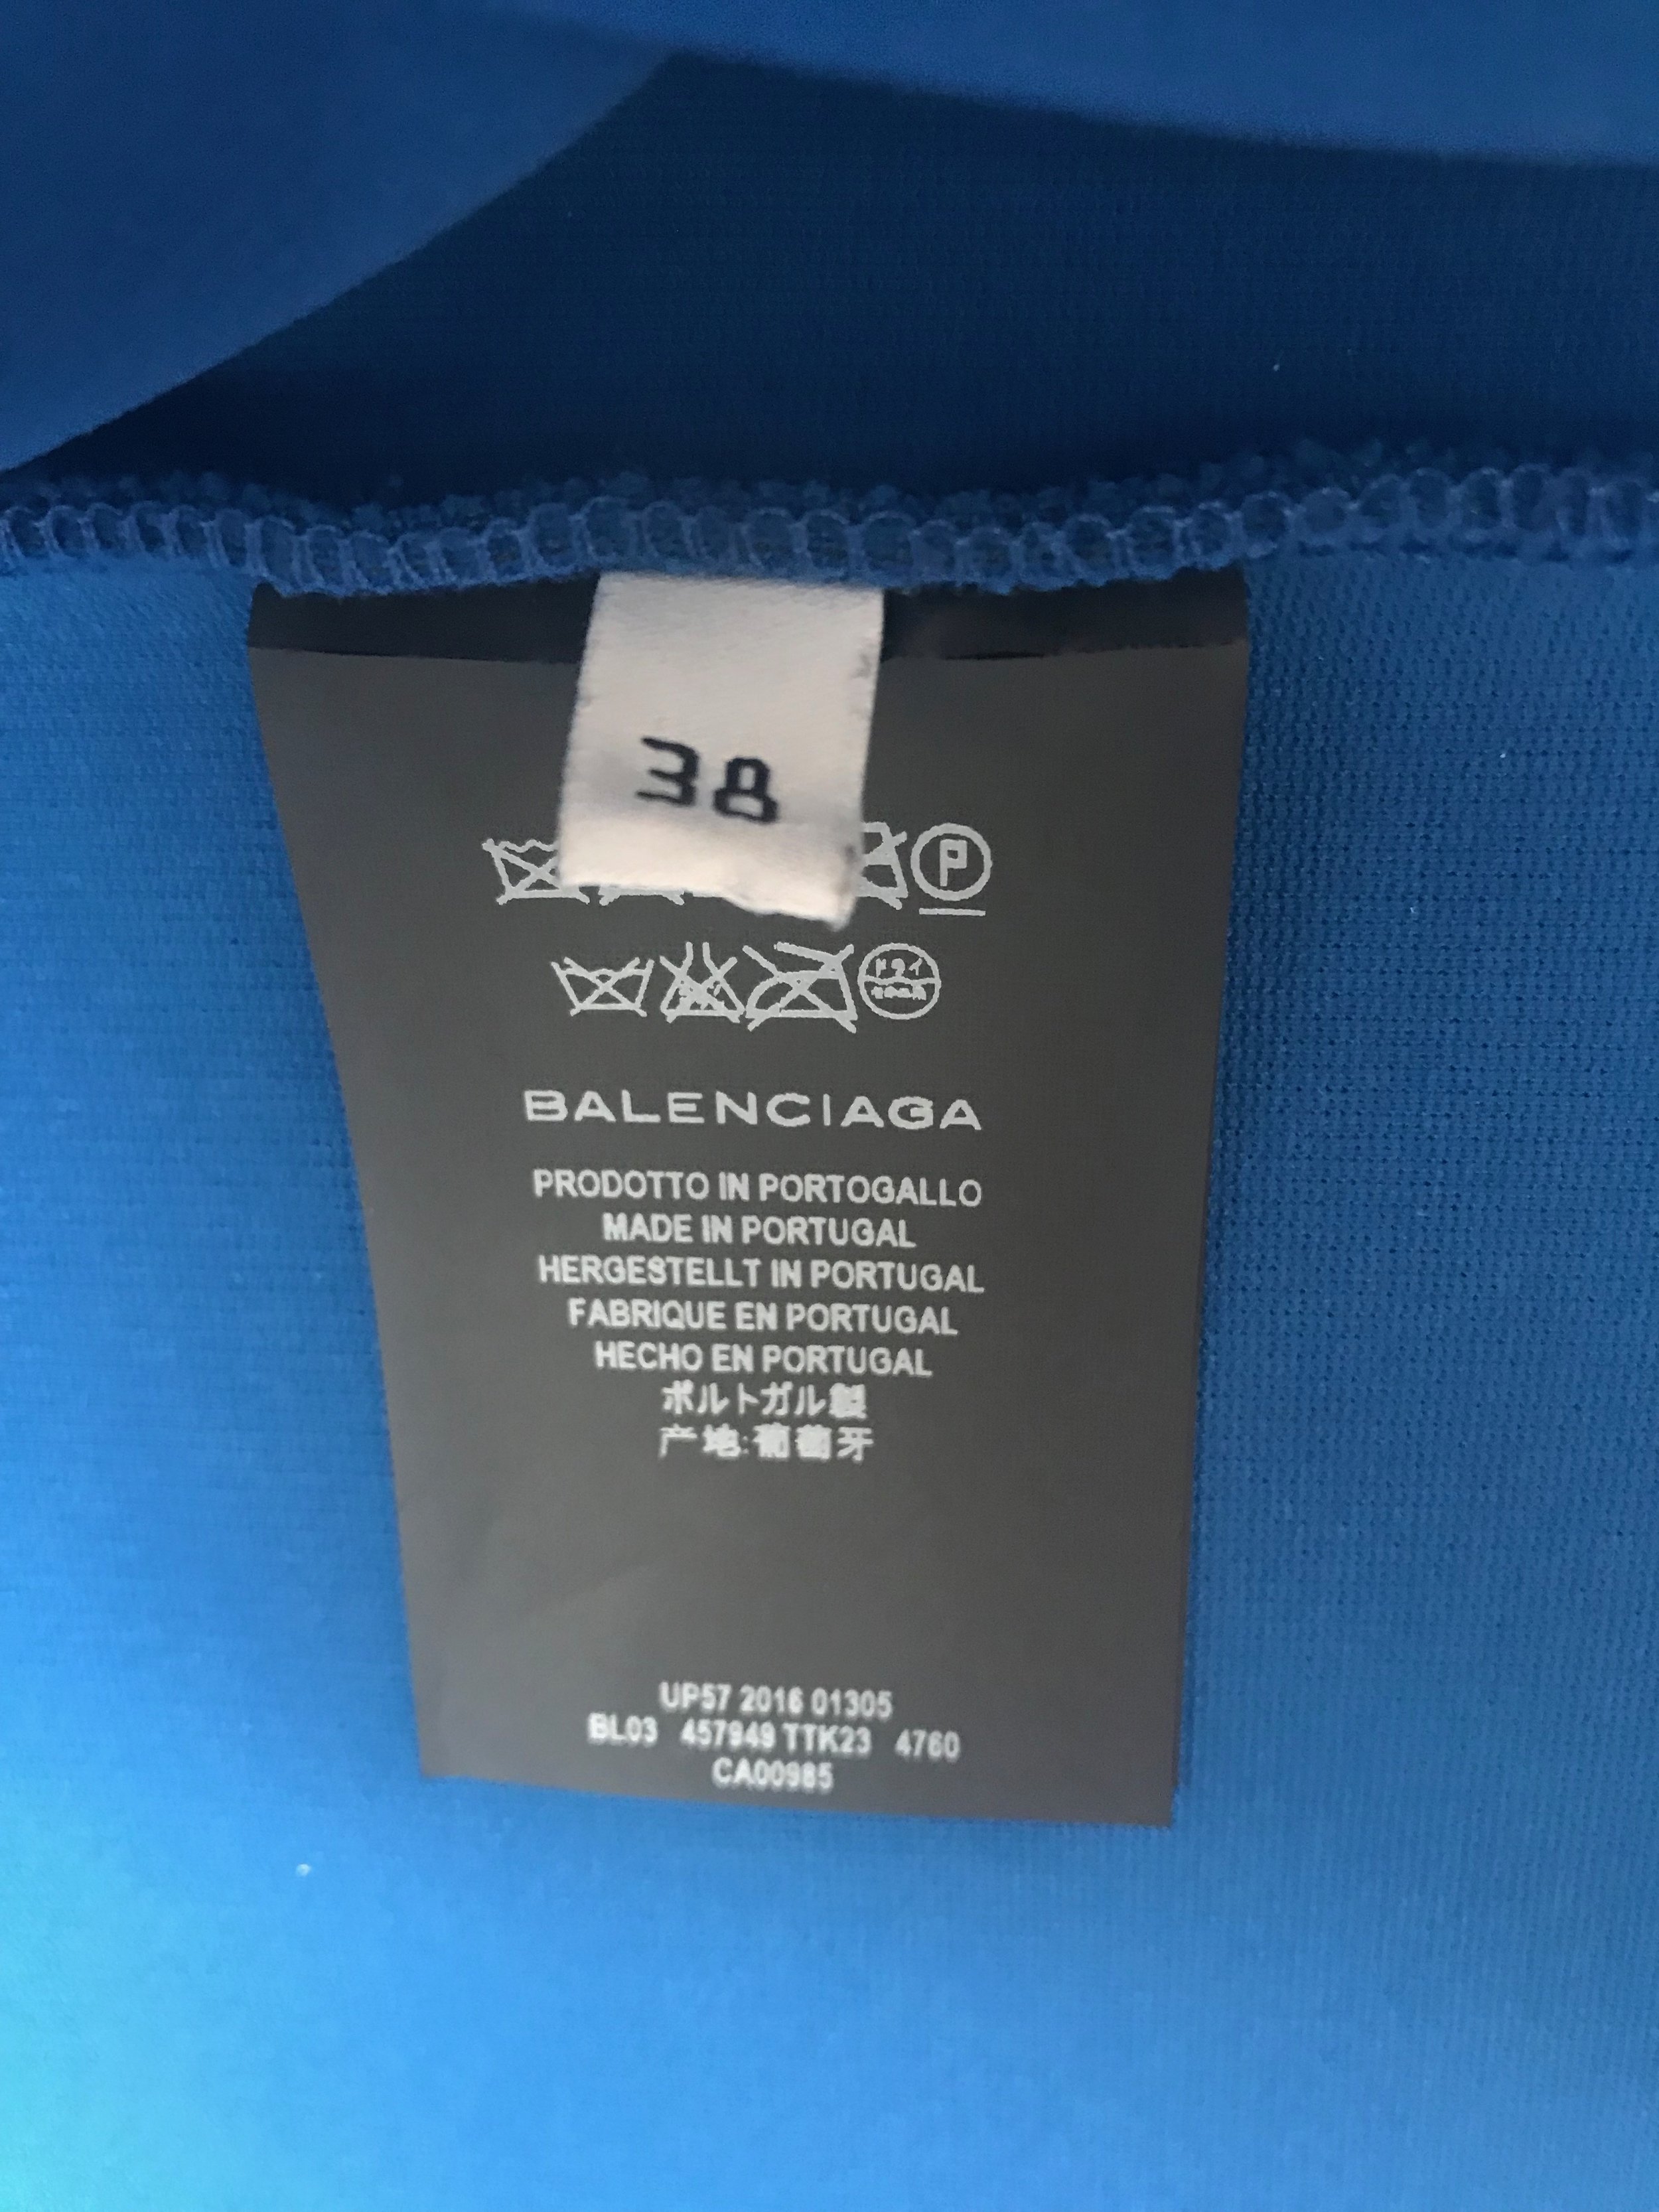 is balenciaga made in portugal